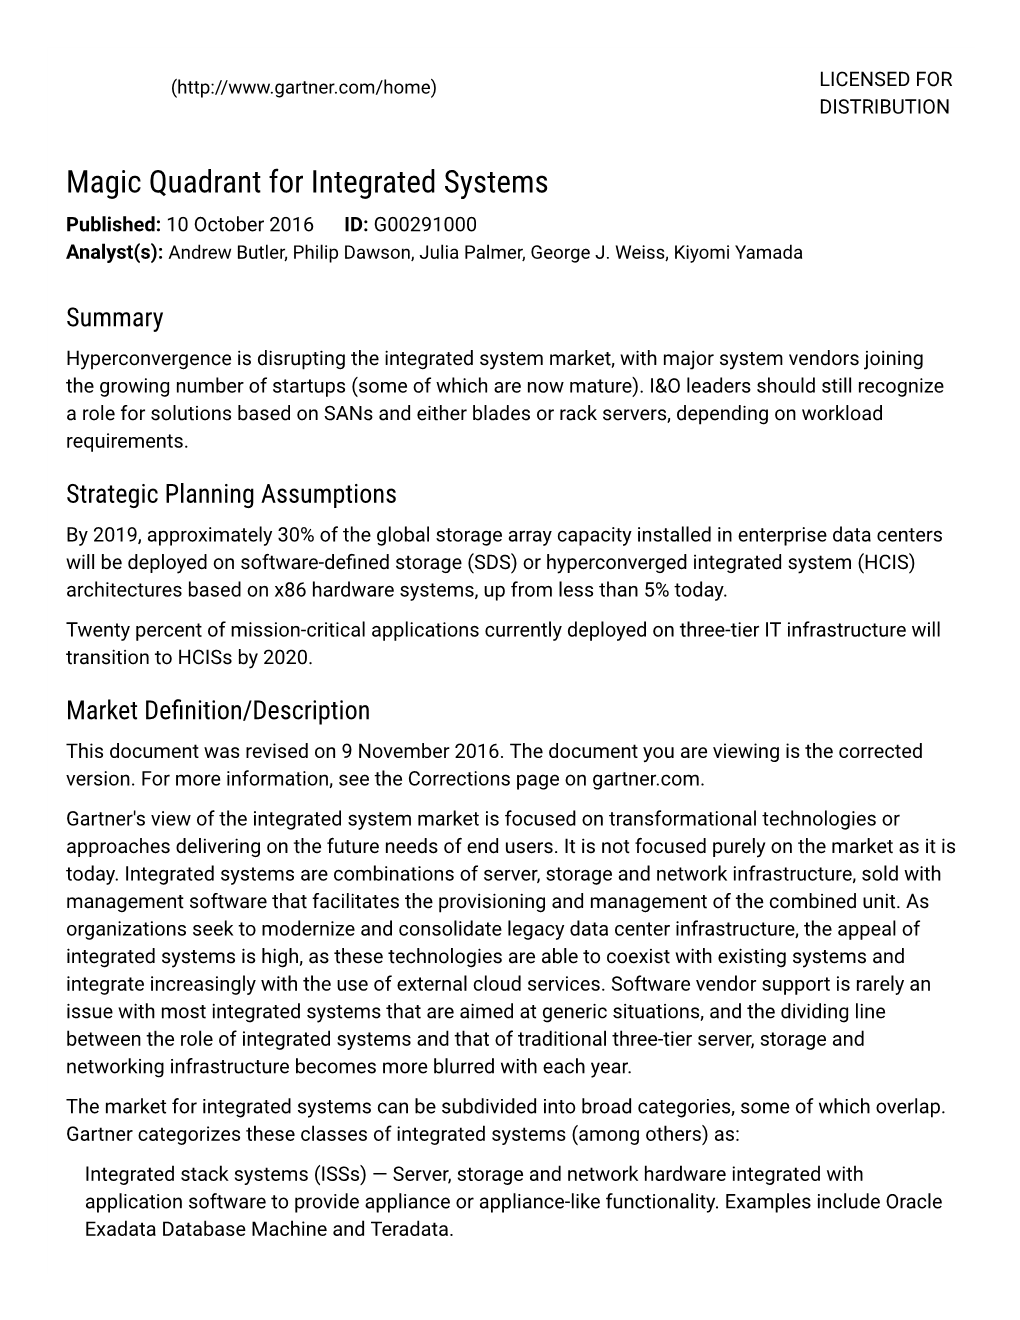 Gartner Magic Quadrant for Integrated Systems